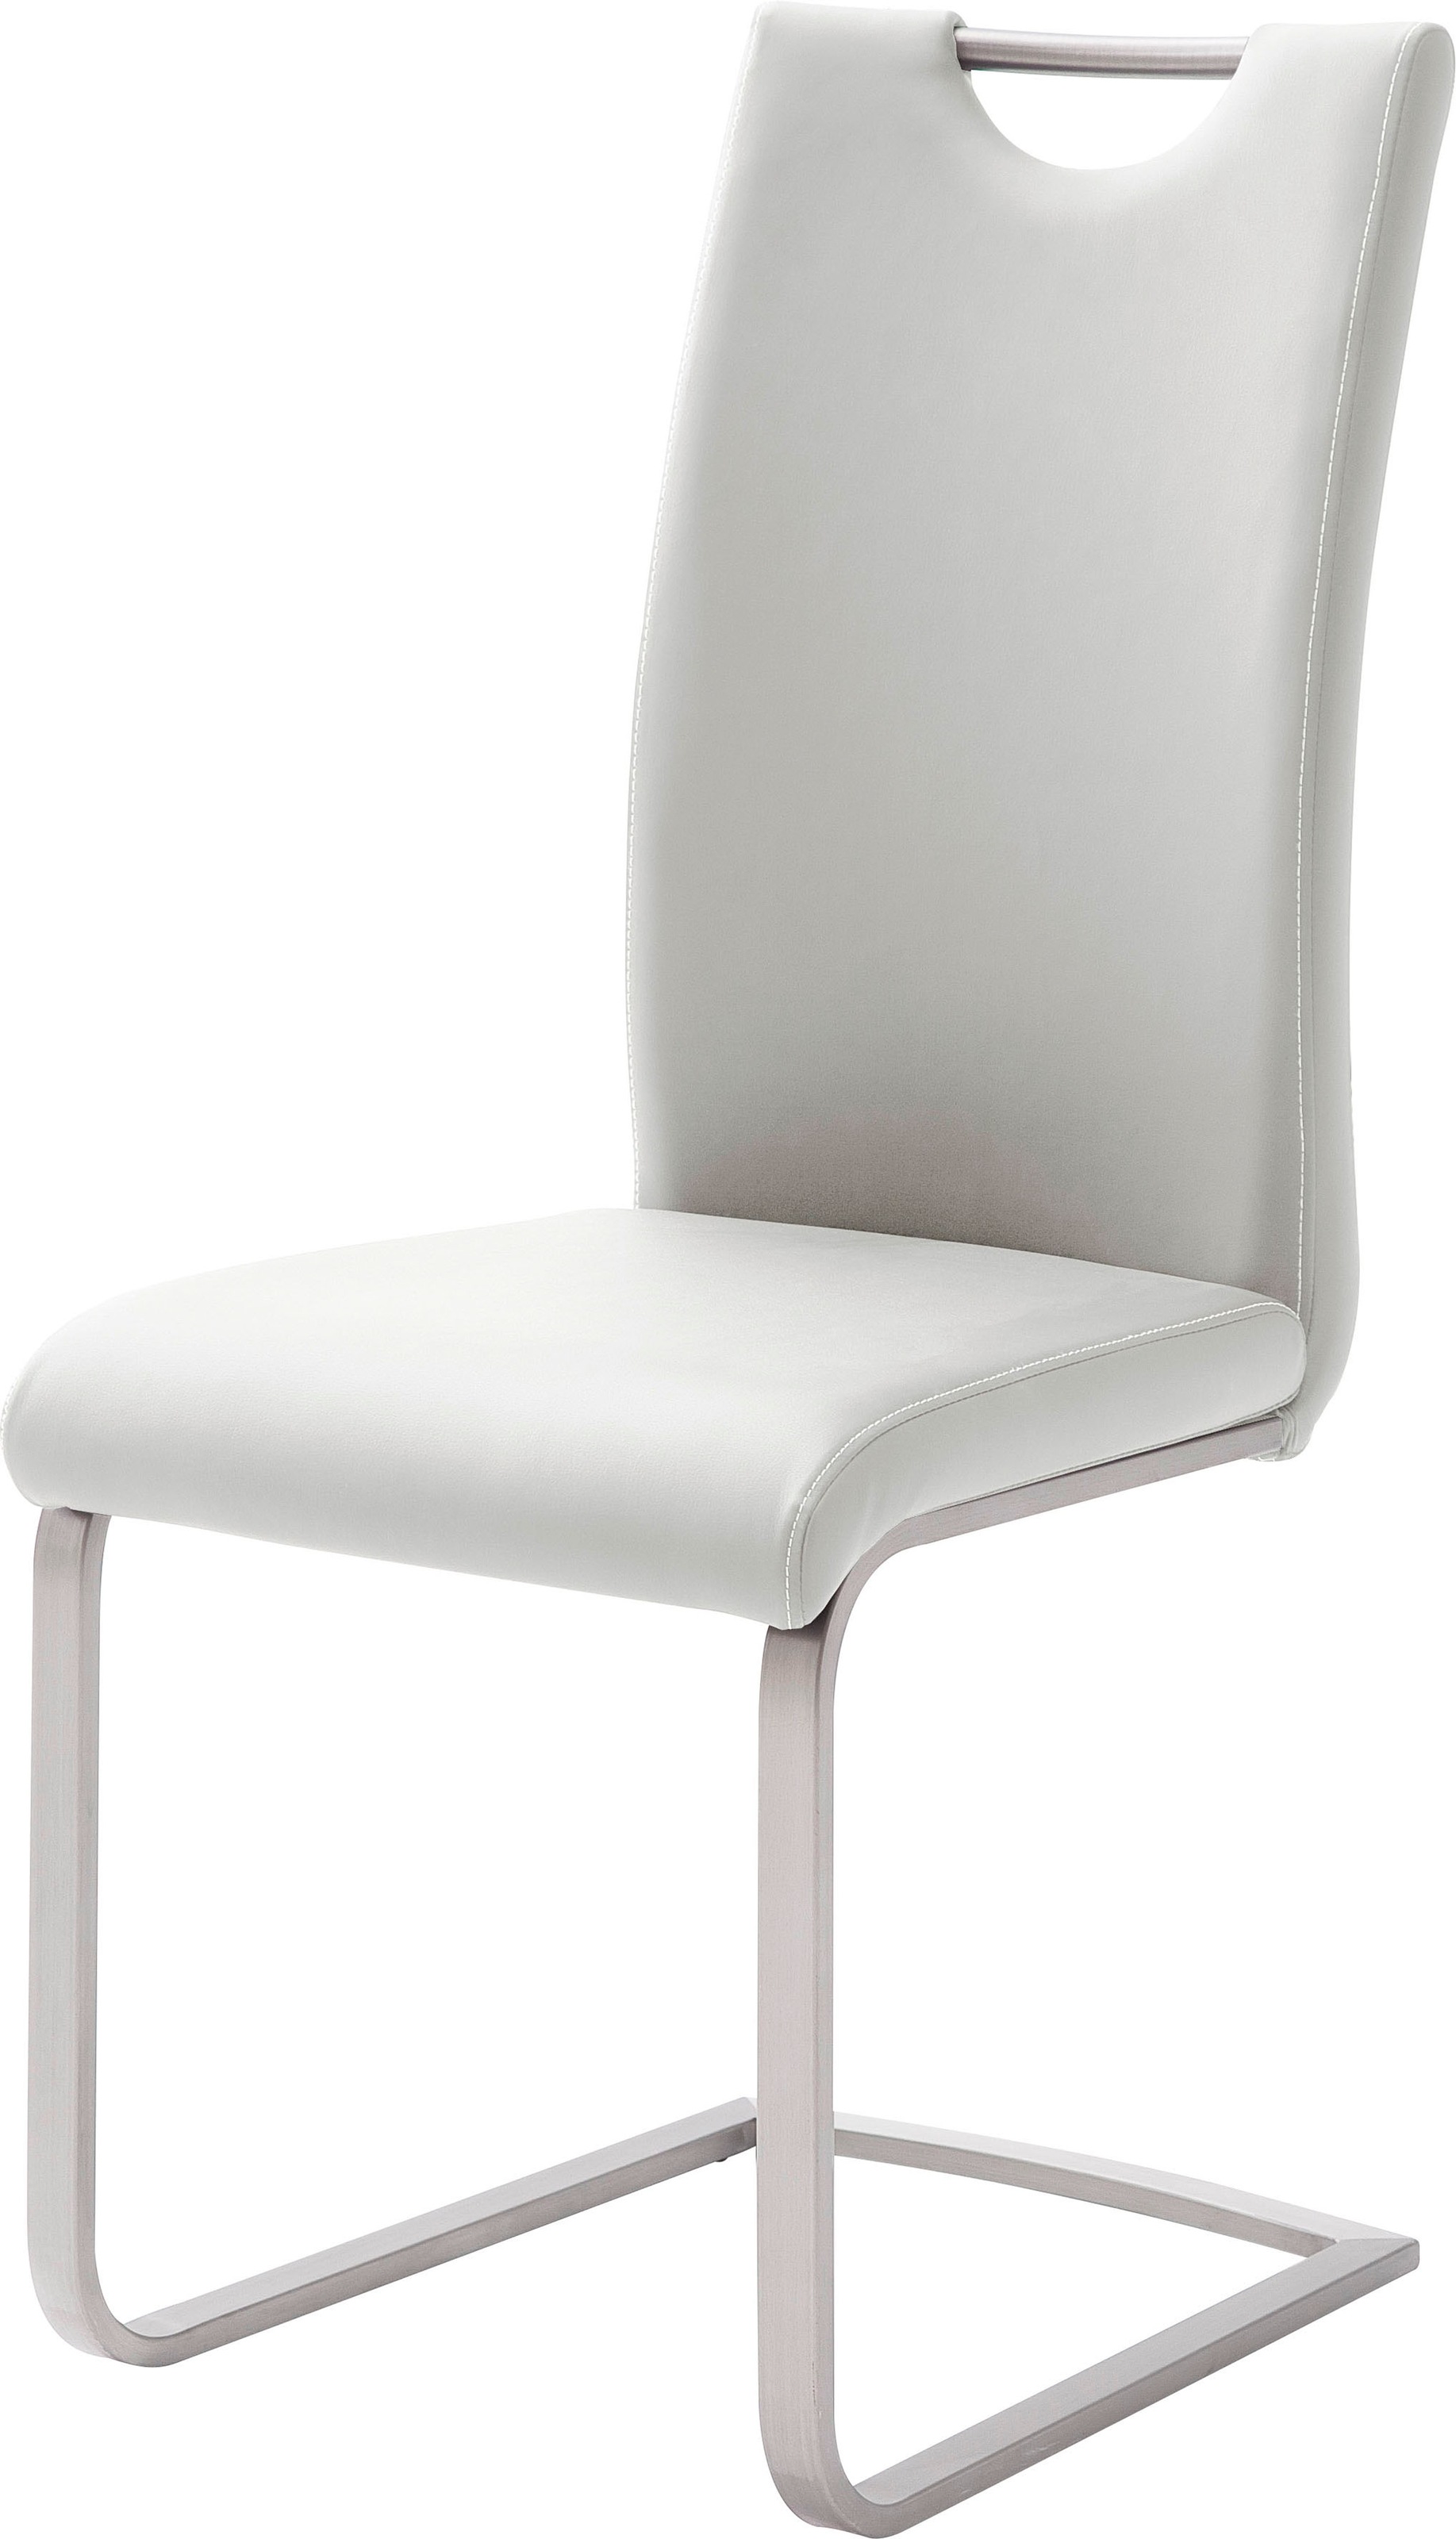 MCA furniture Freischwinger »Paulo«, (Set), bis 4 belastbar Stuhl kg 120 St., bequem Kunstleder, kaufen